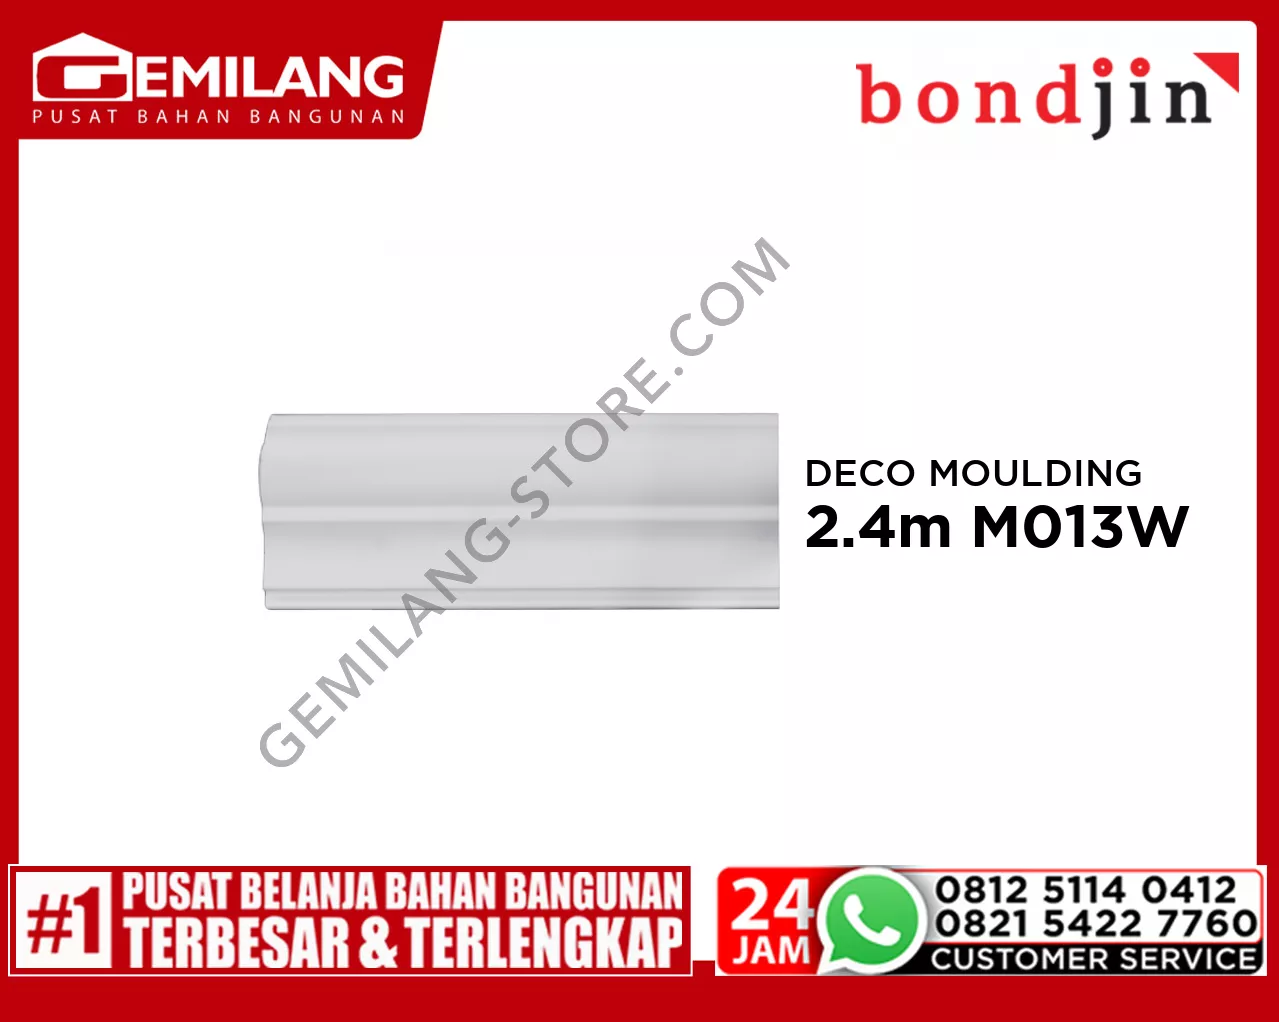 BONDJIN DOOR MOULDING 2.4M M013-W